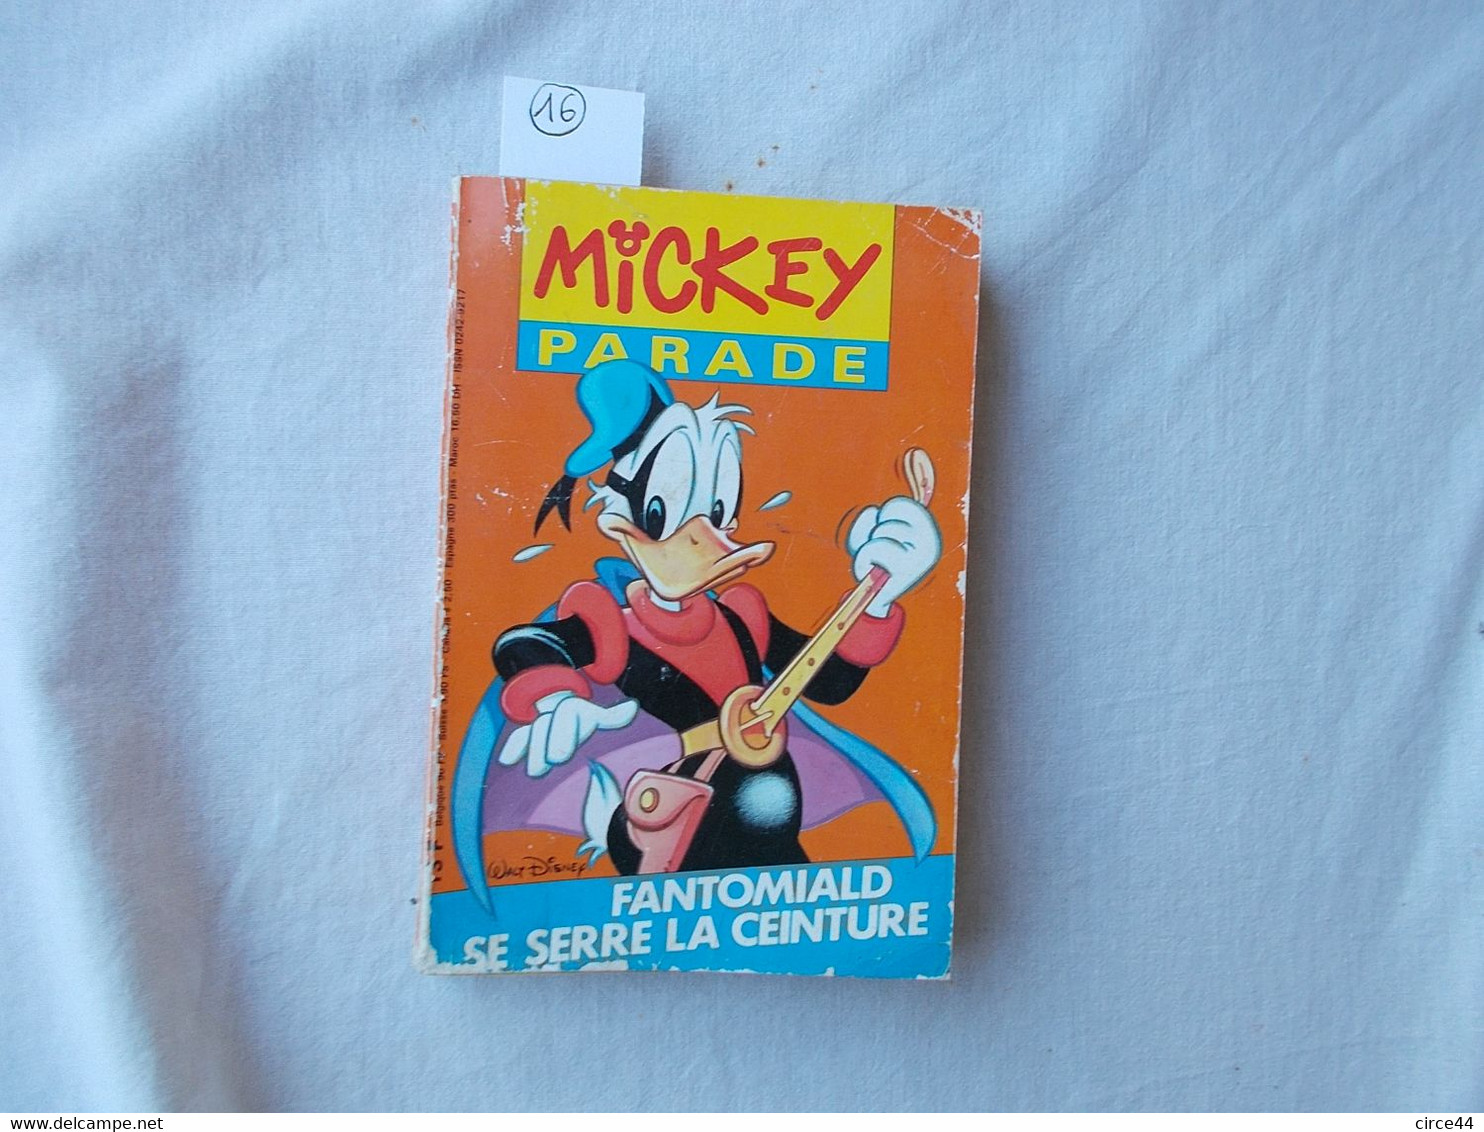 JOURNAL DE MICKEY.WALT DISNEY.MICKEY PARADE.224 PAGES.ANNEE 1971.DONALD.FANTOMIALD SE SERRE LA CEINTURE - Mickey Parade